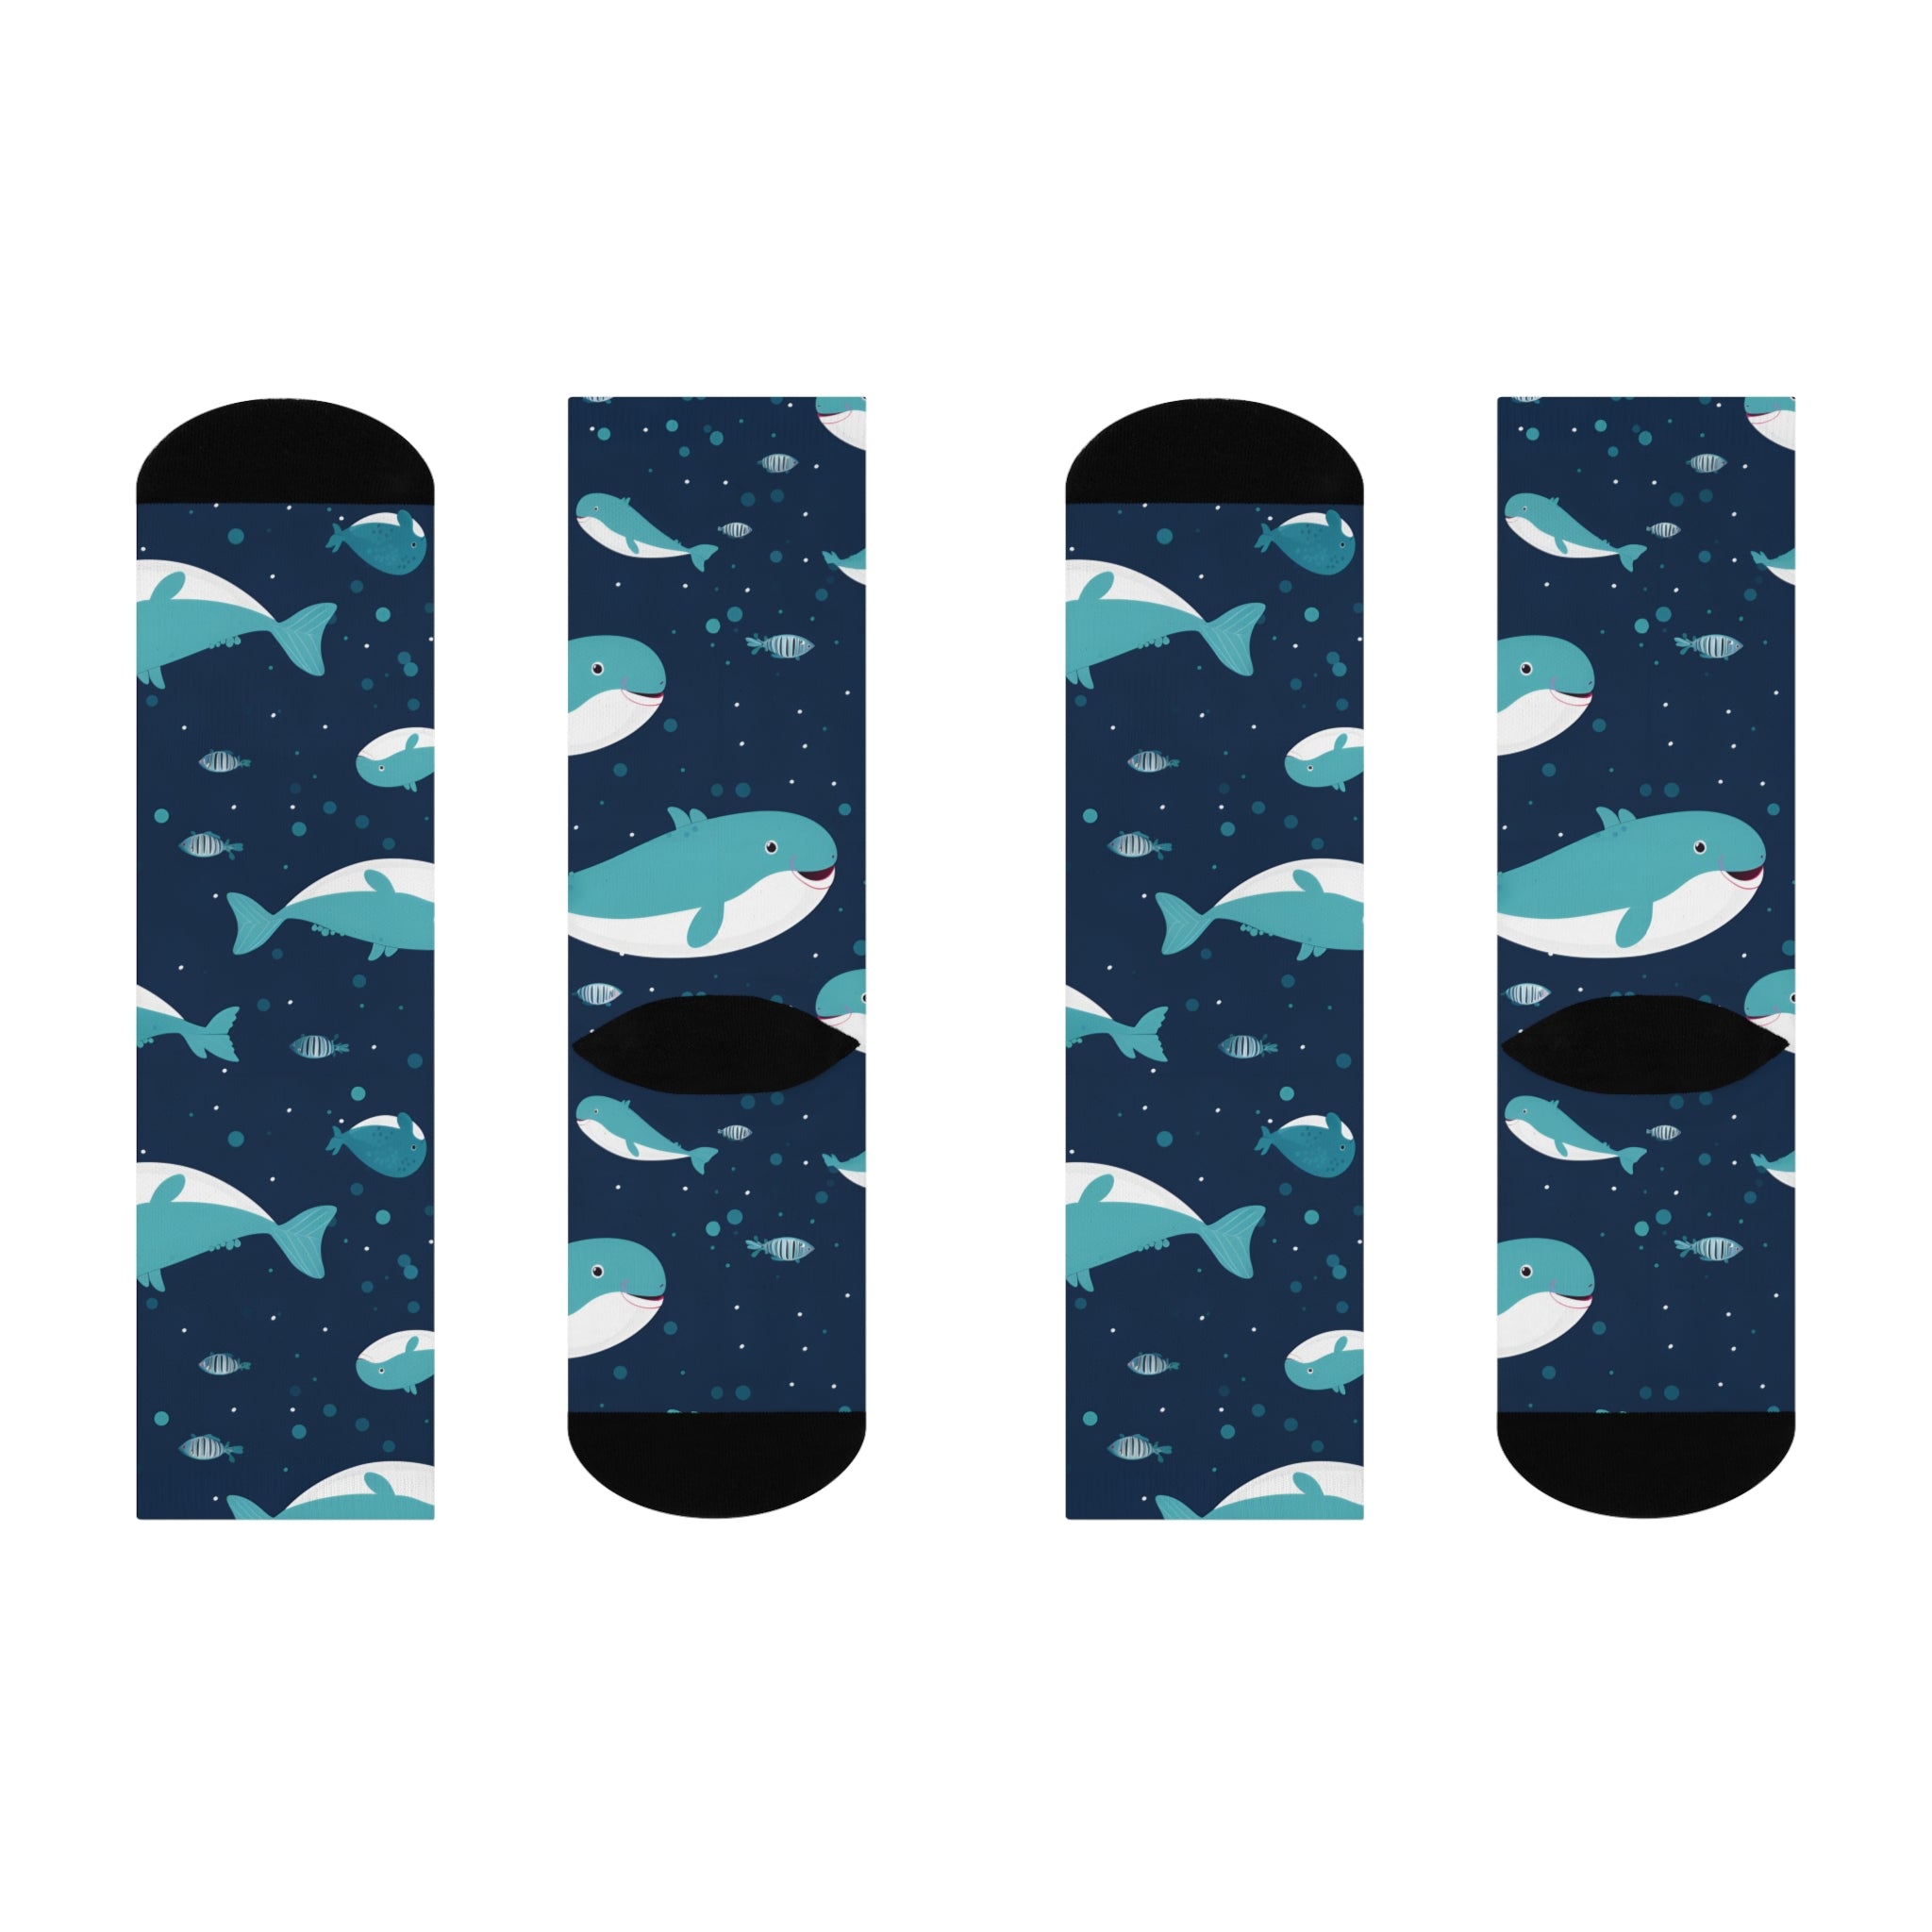 Happy Whales Cushioned Crew Socks